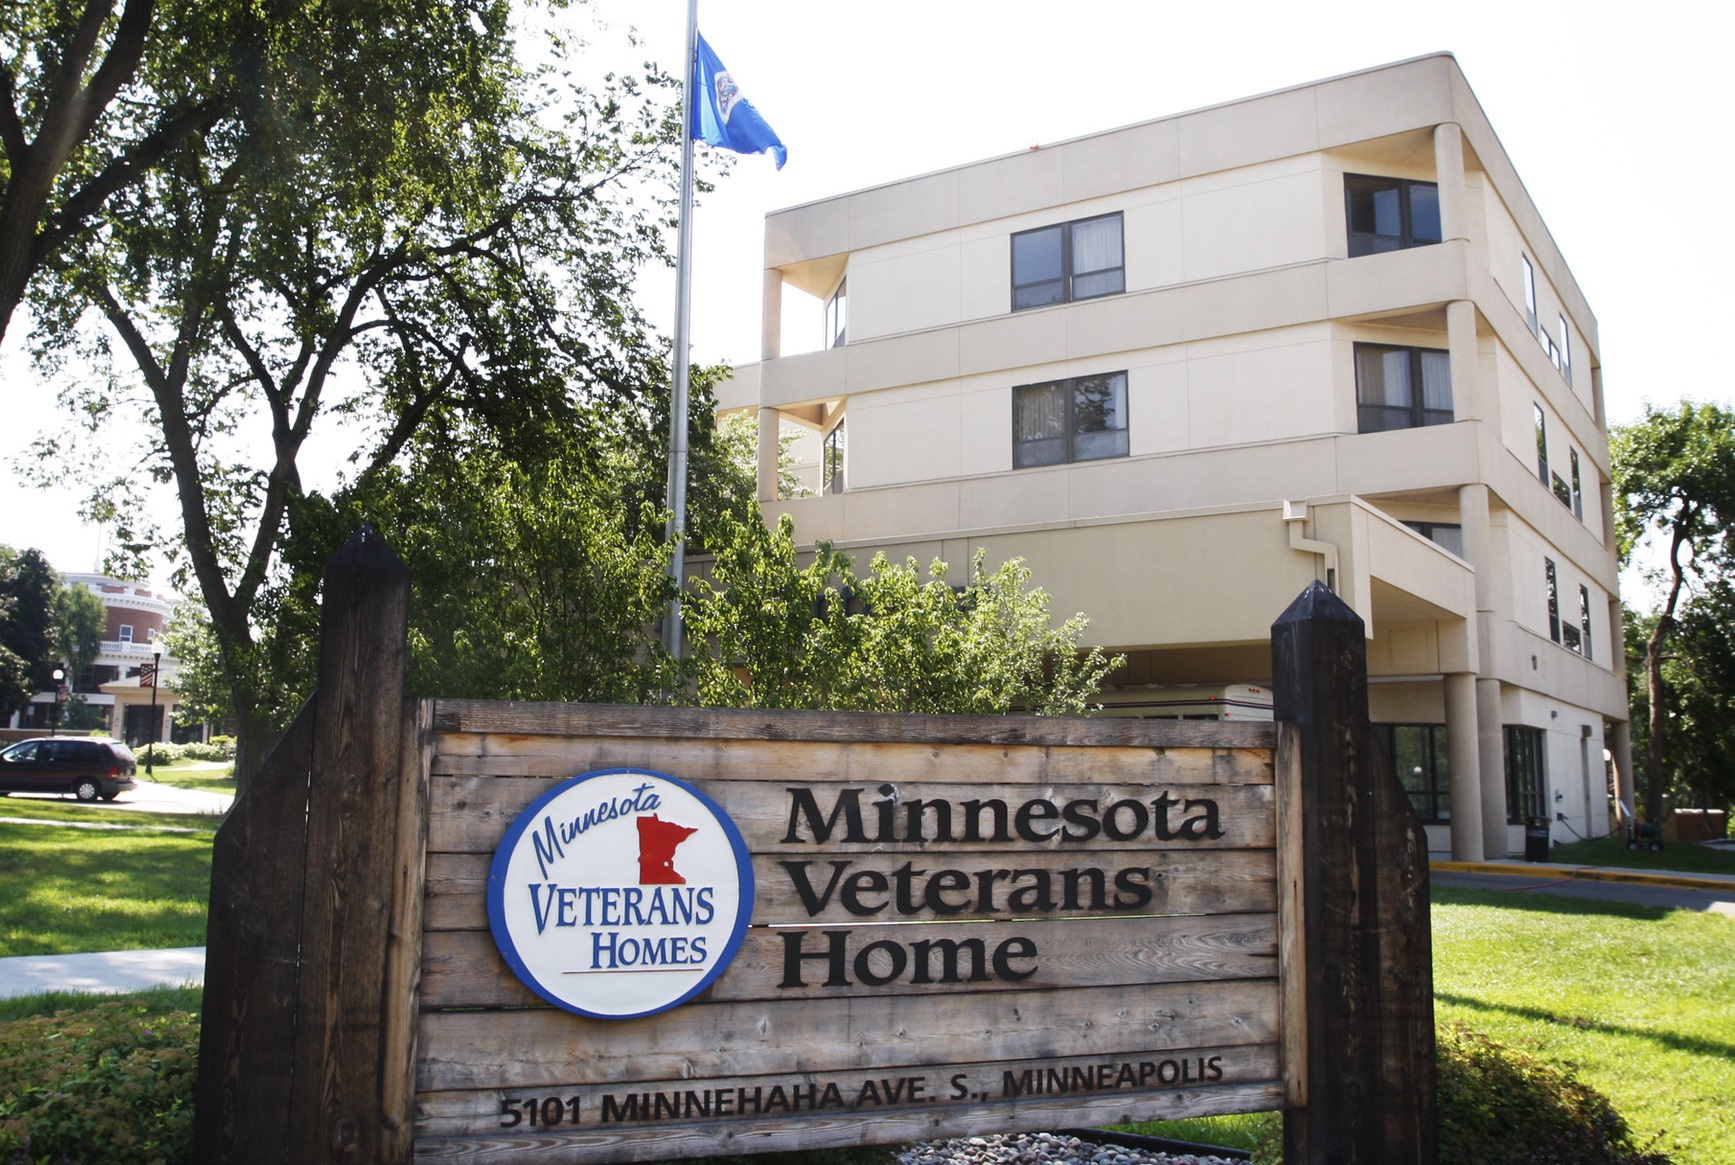 Minneapolis, Minnesota Veterans Home